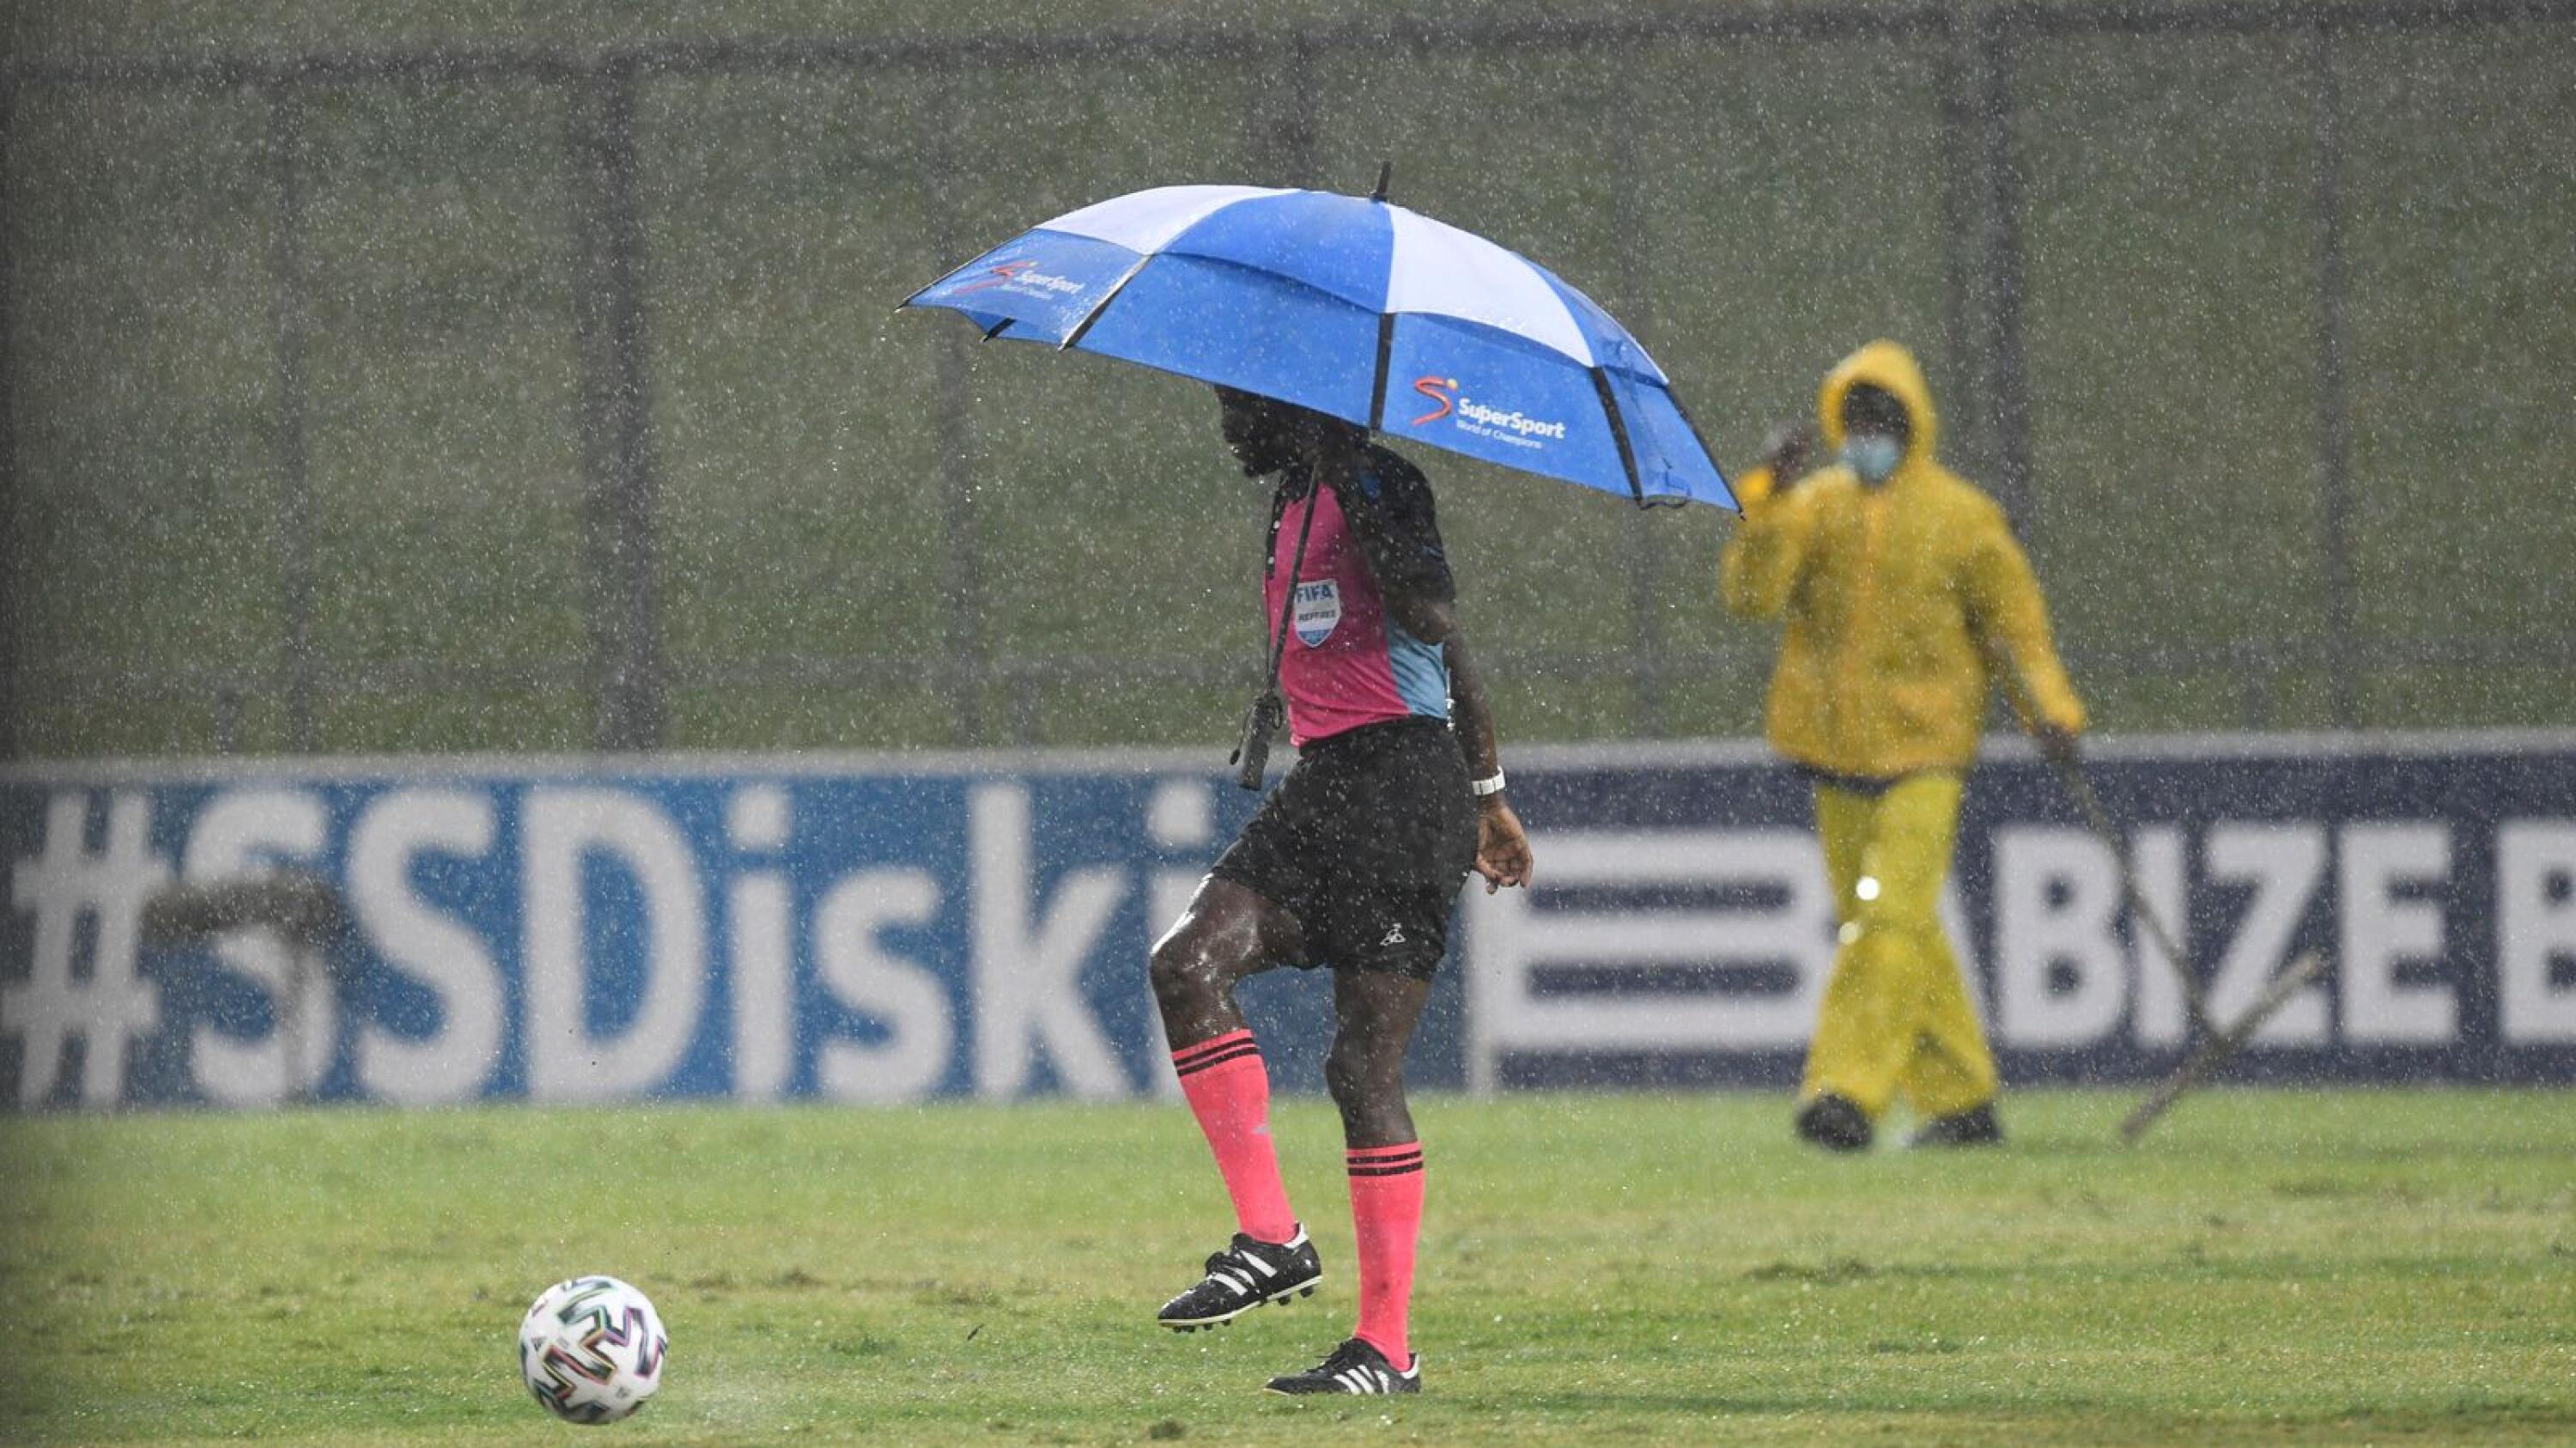 Match referee Jelly Chavani calls off the DStv Premiership match between Royal AM and Mamelodi Sundowns at Chatsworth Stadium in Durban due to rain